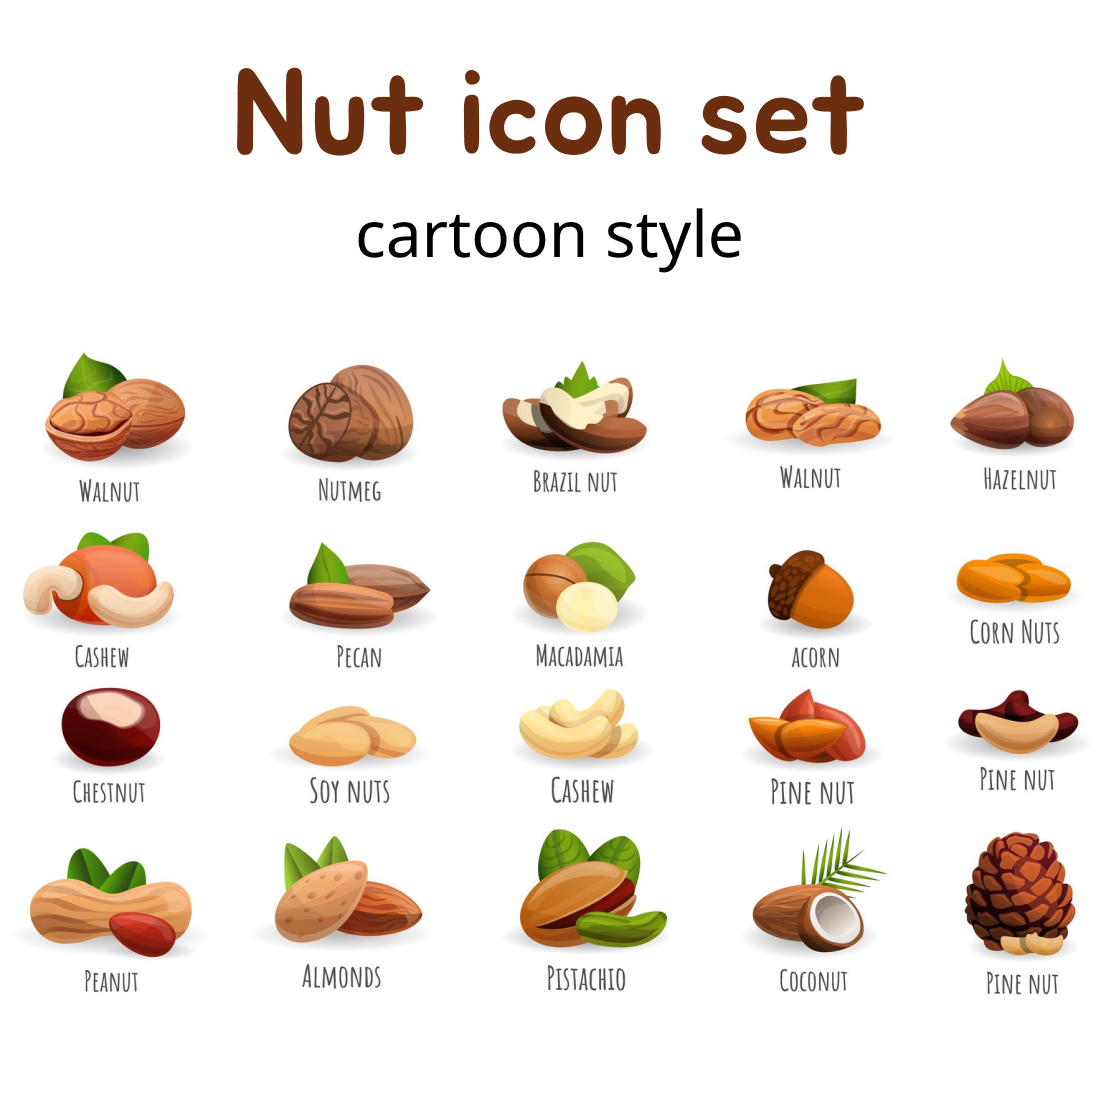 Nut icon set, cartoon style.